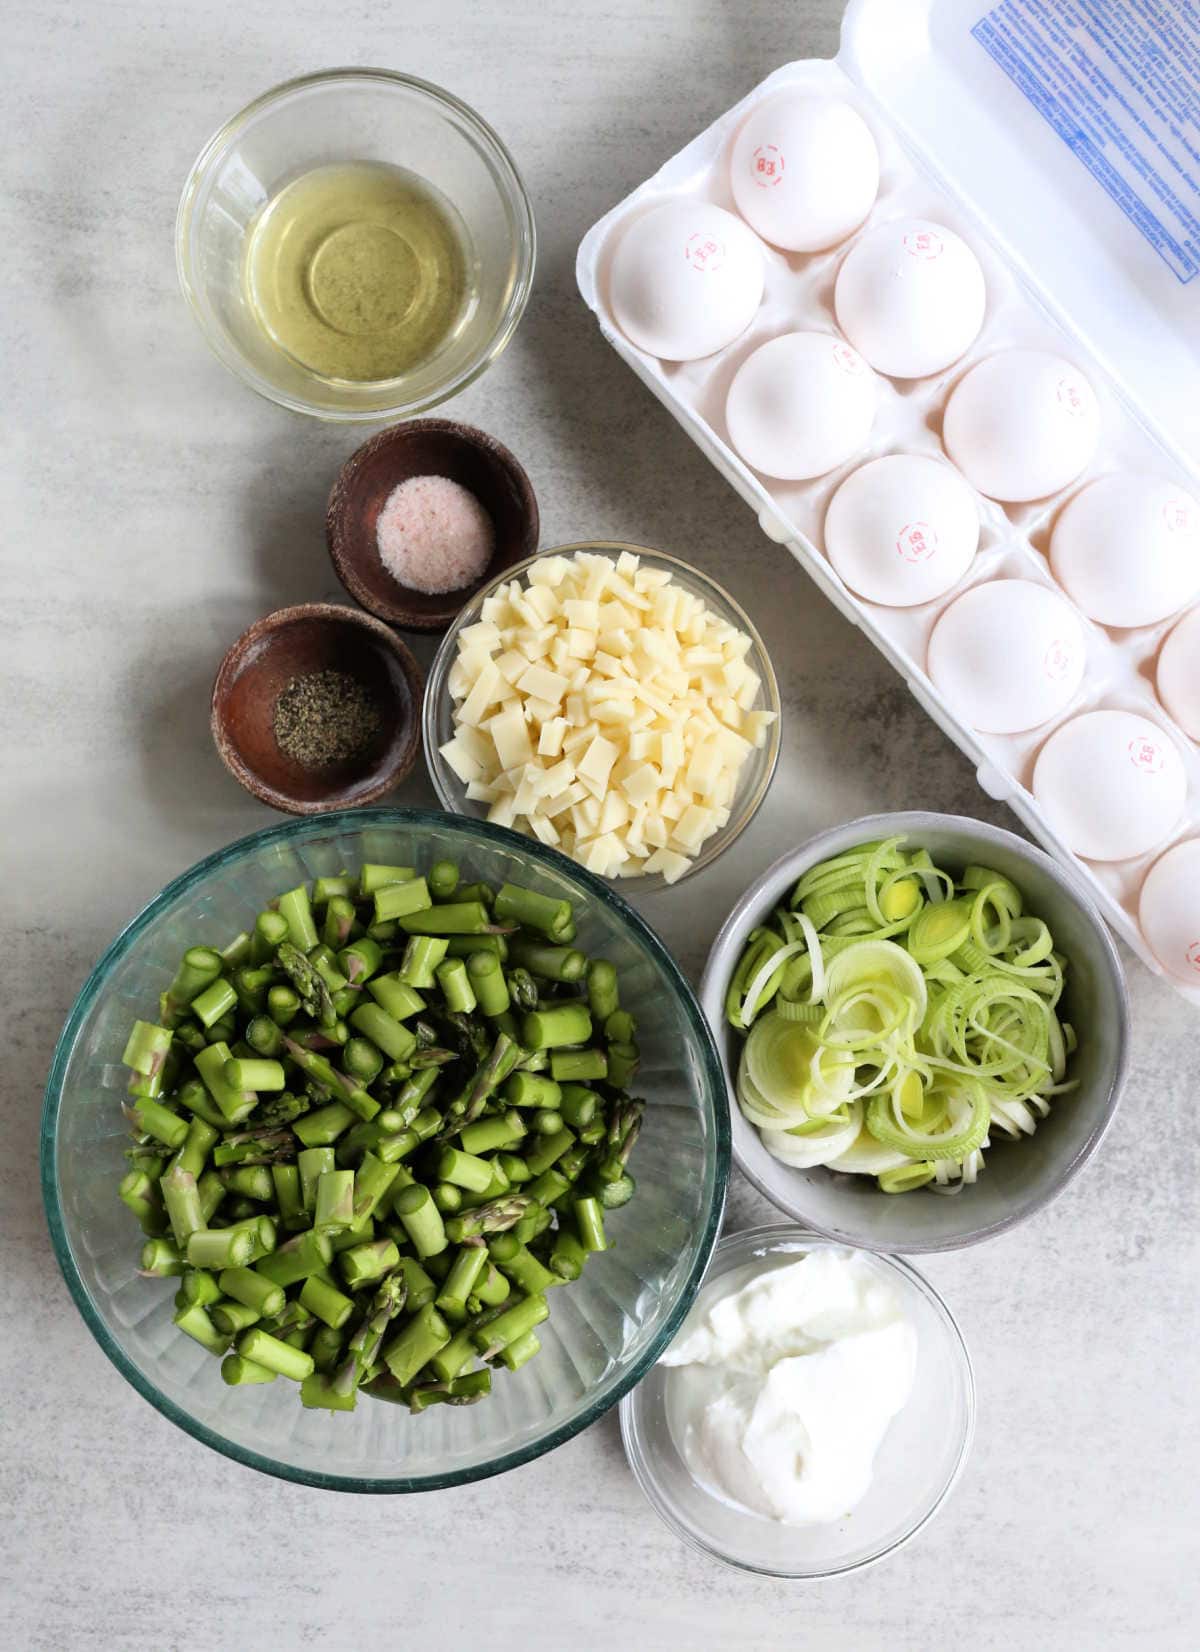 Ingredients For Asparagus And Leek Frittata With Greek Yogurt